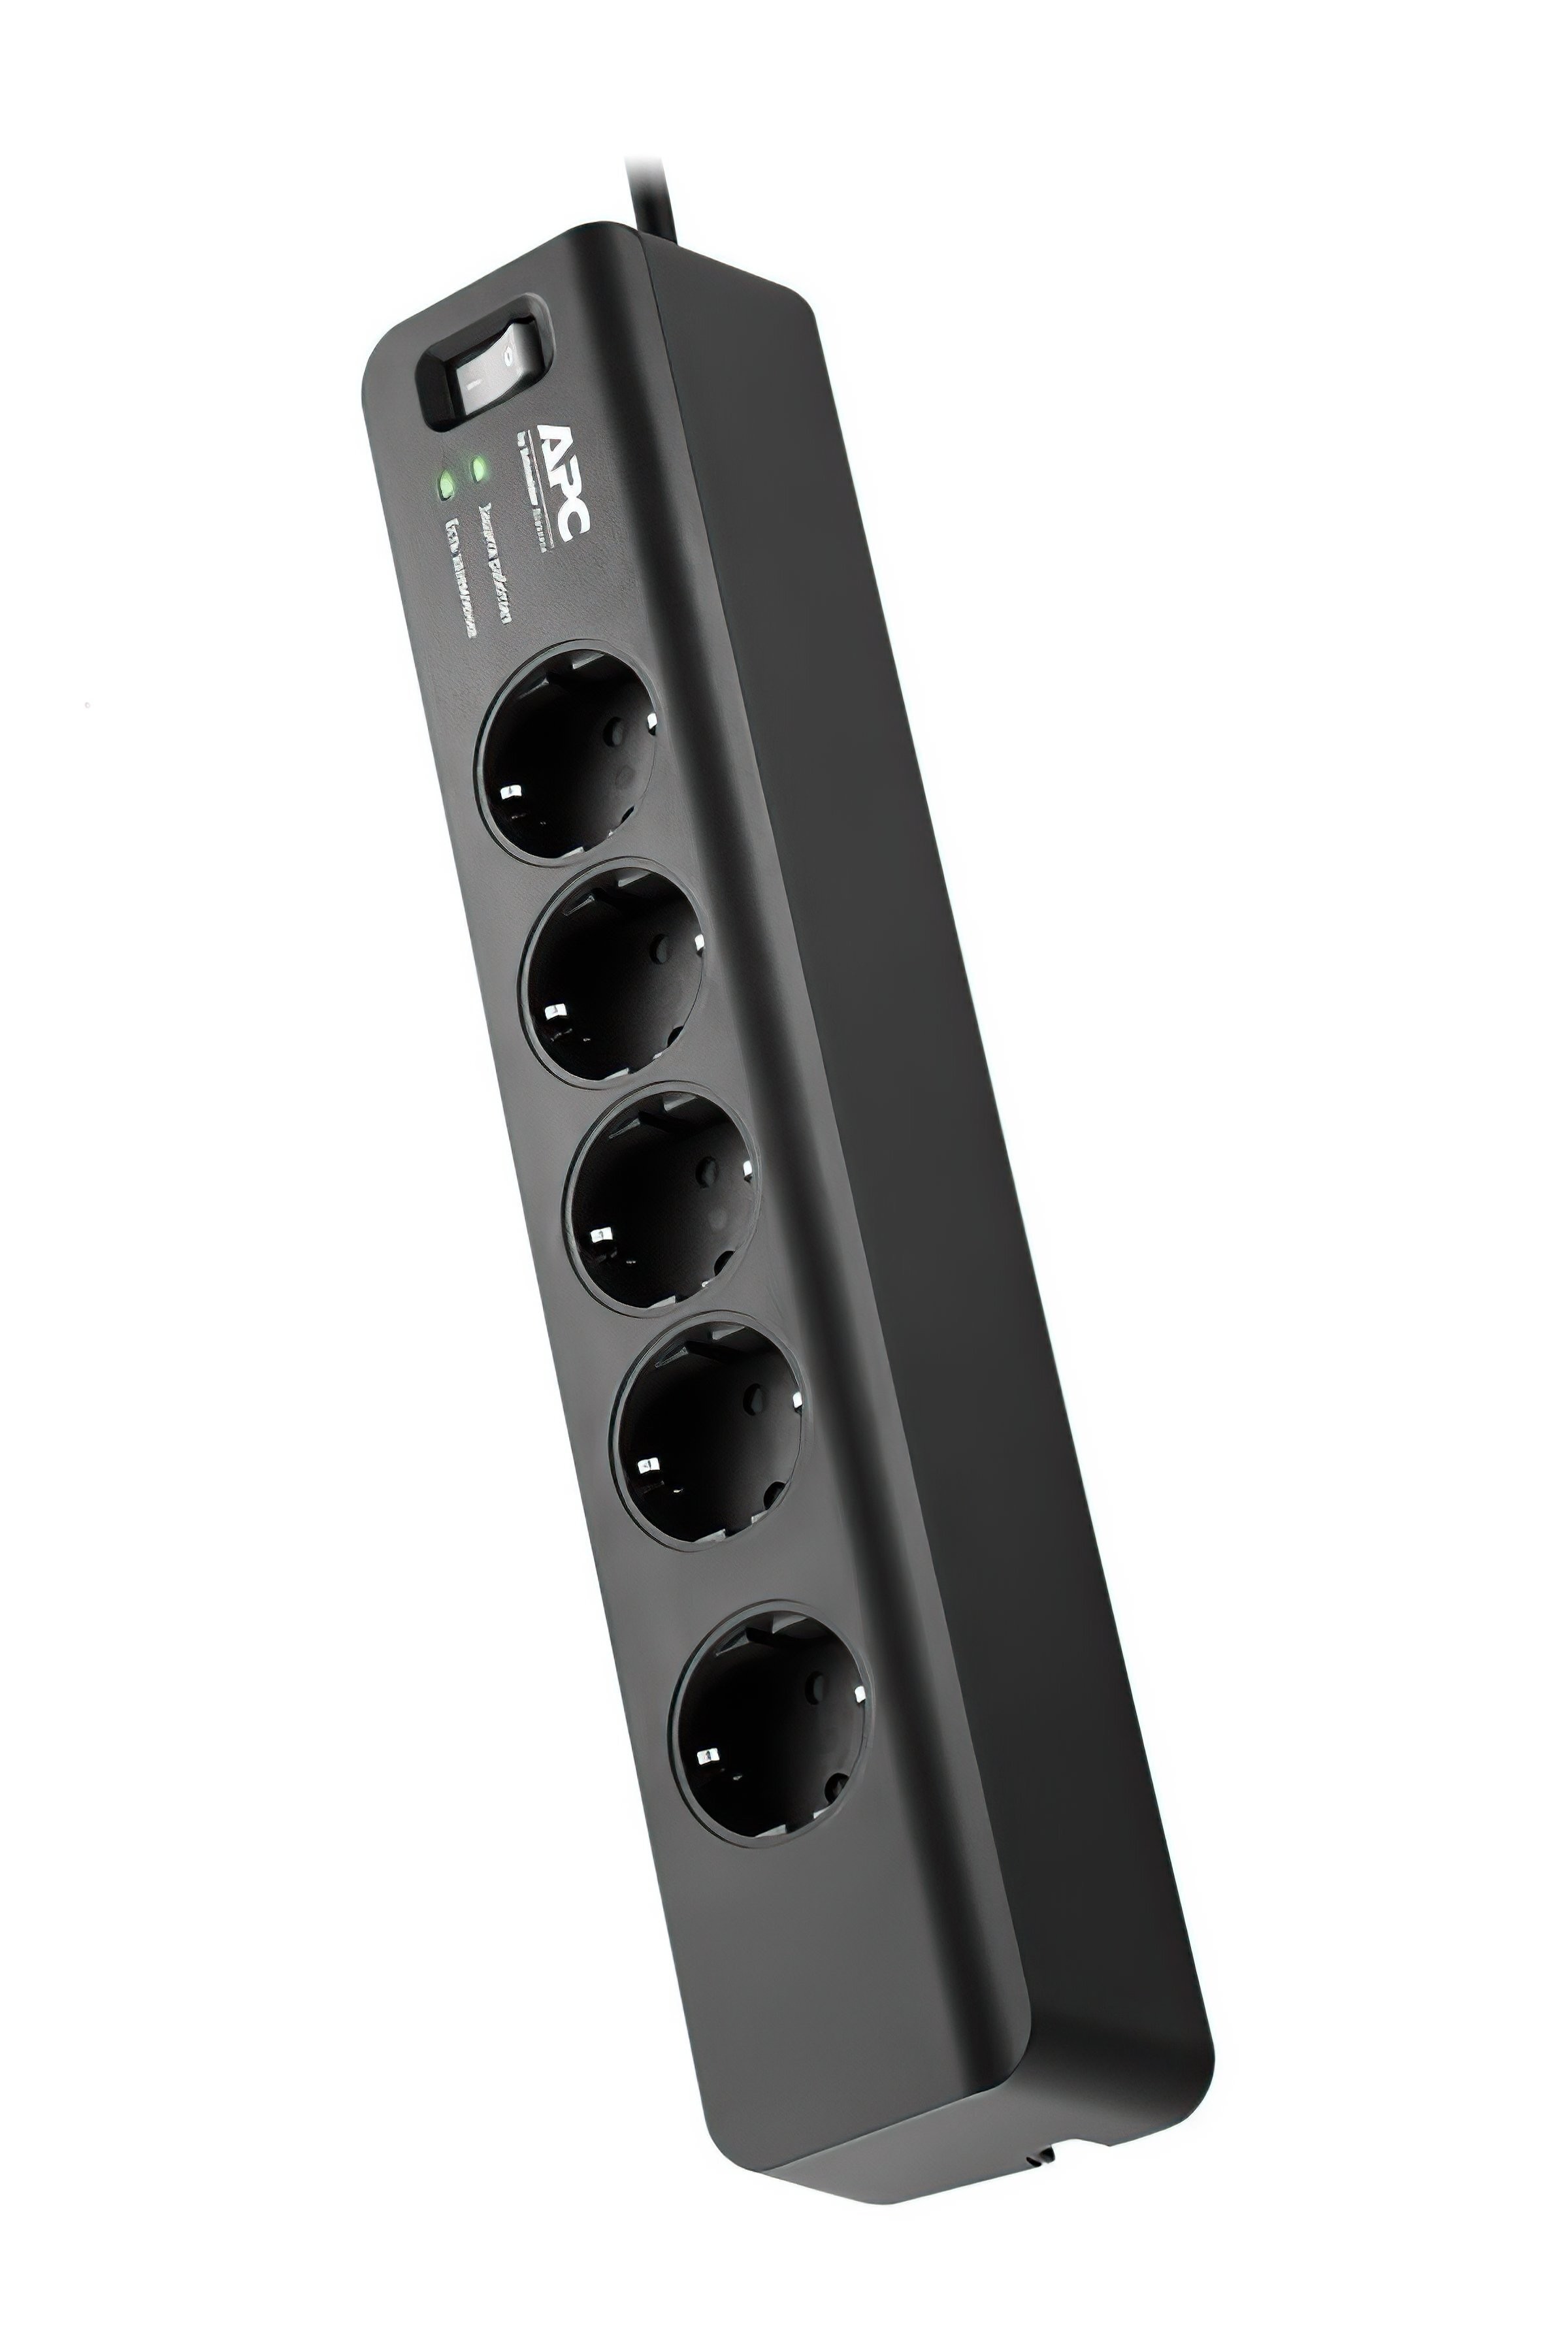 Сетевой фильтр APC Essential SurgeArrest 5 outlets new, Black (PM5B-RS) в Херсоне